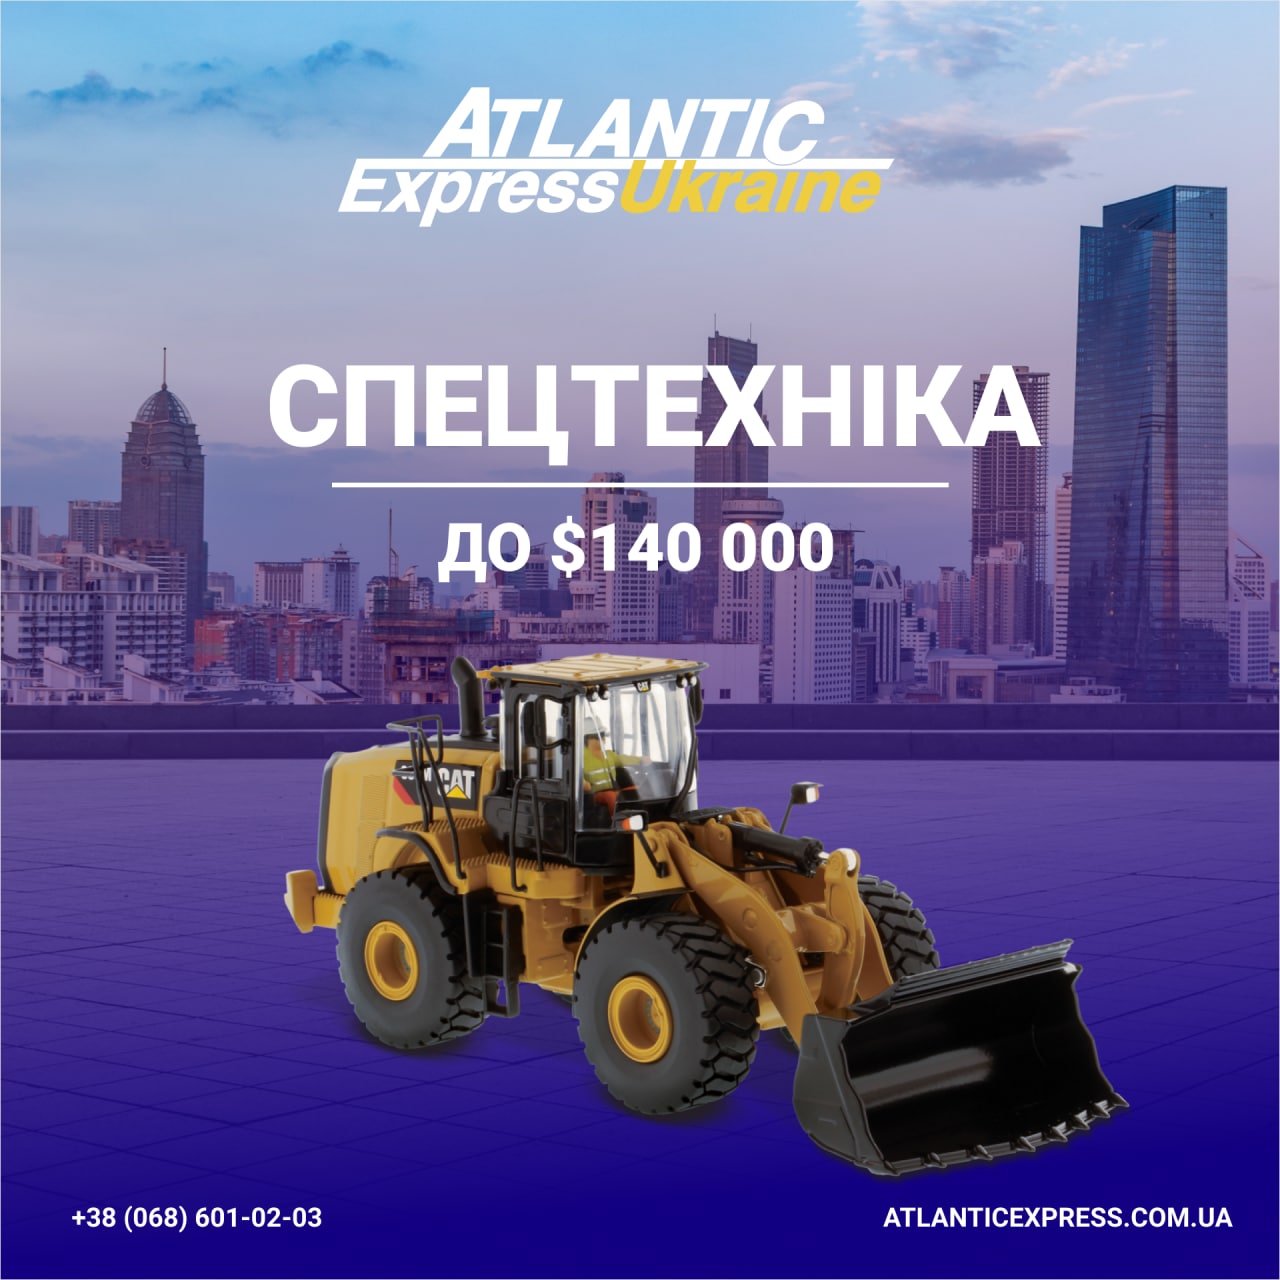 Atlantic express